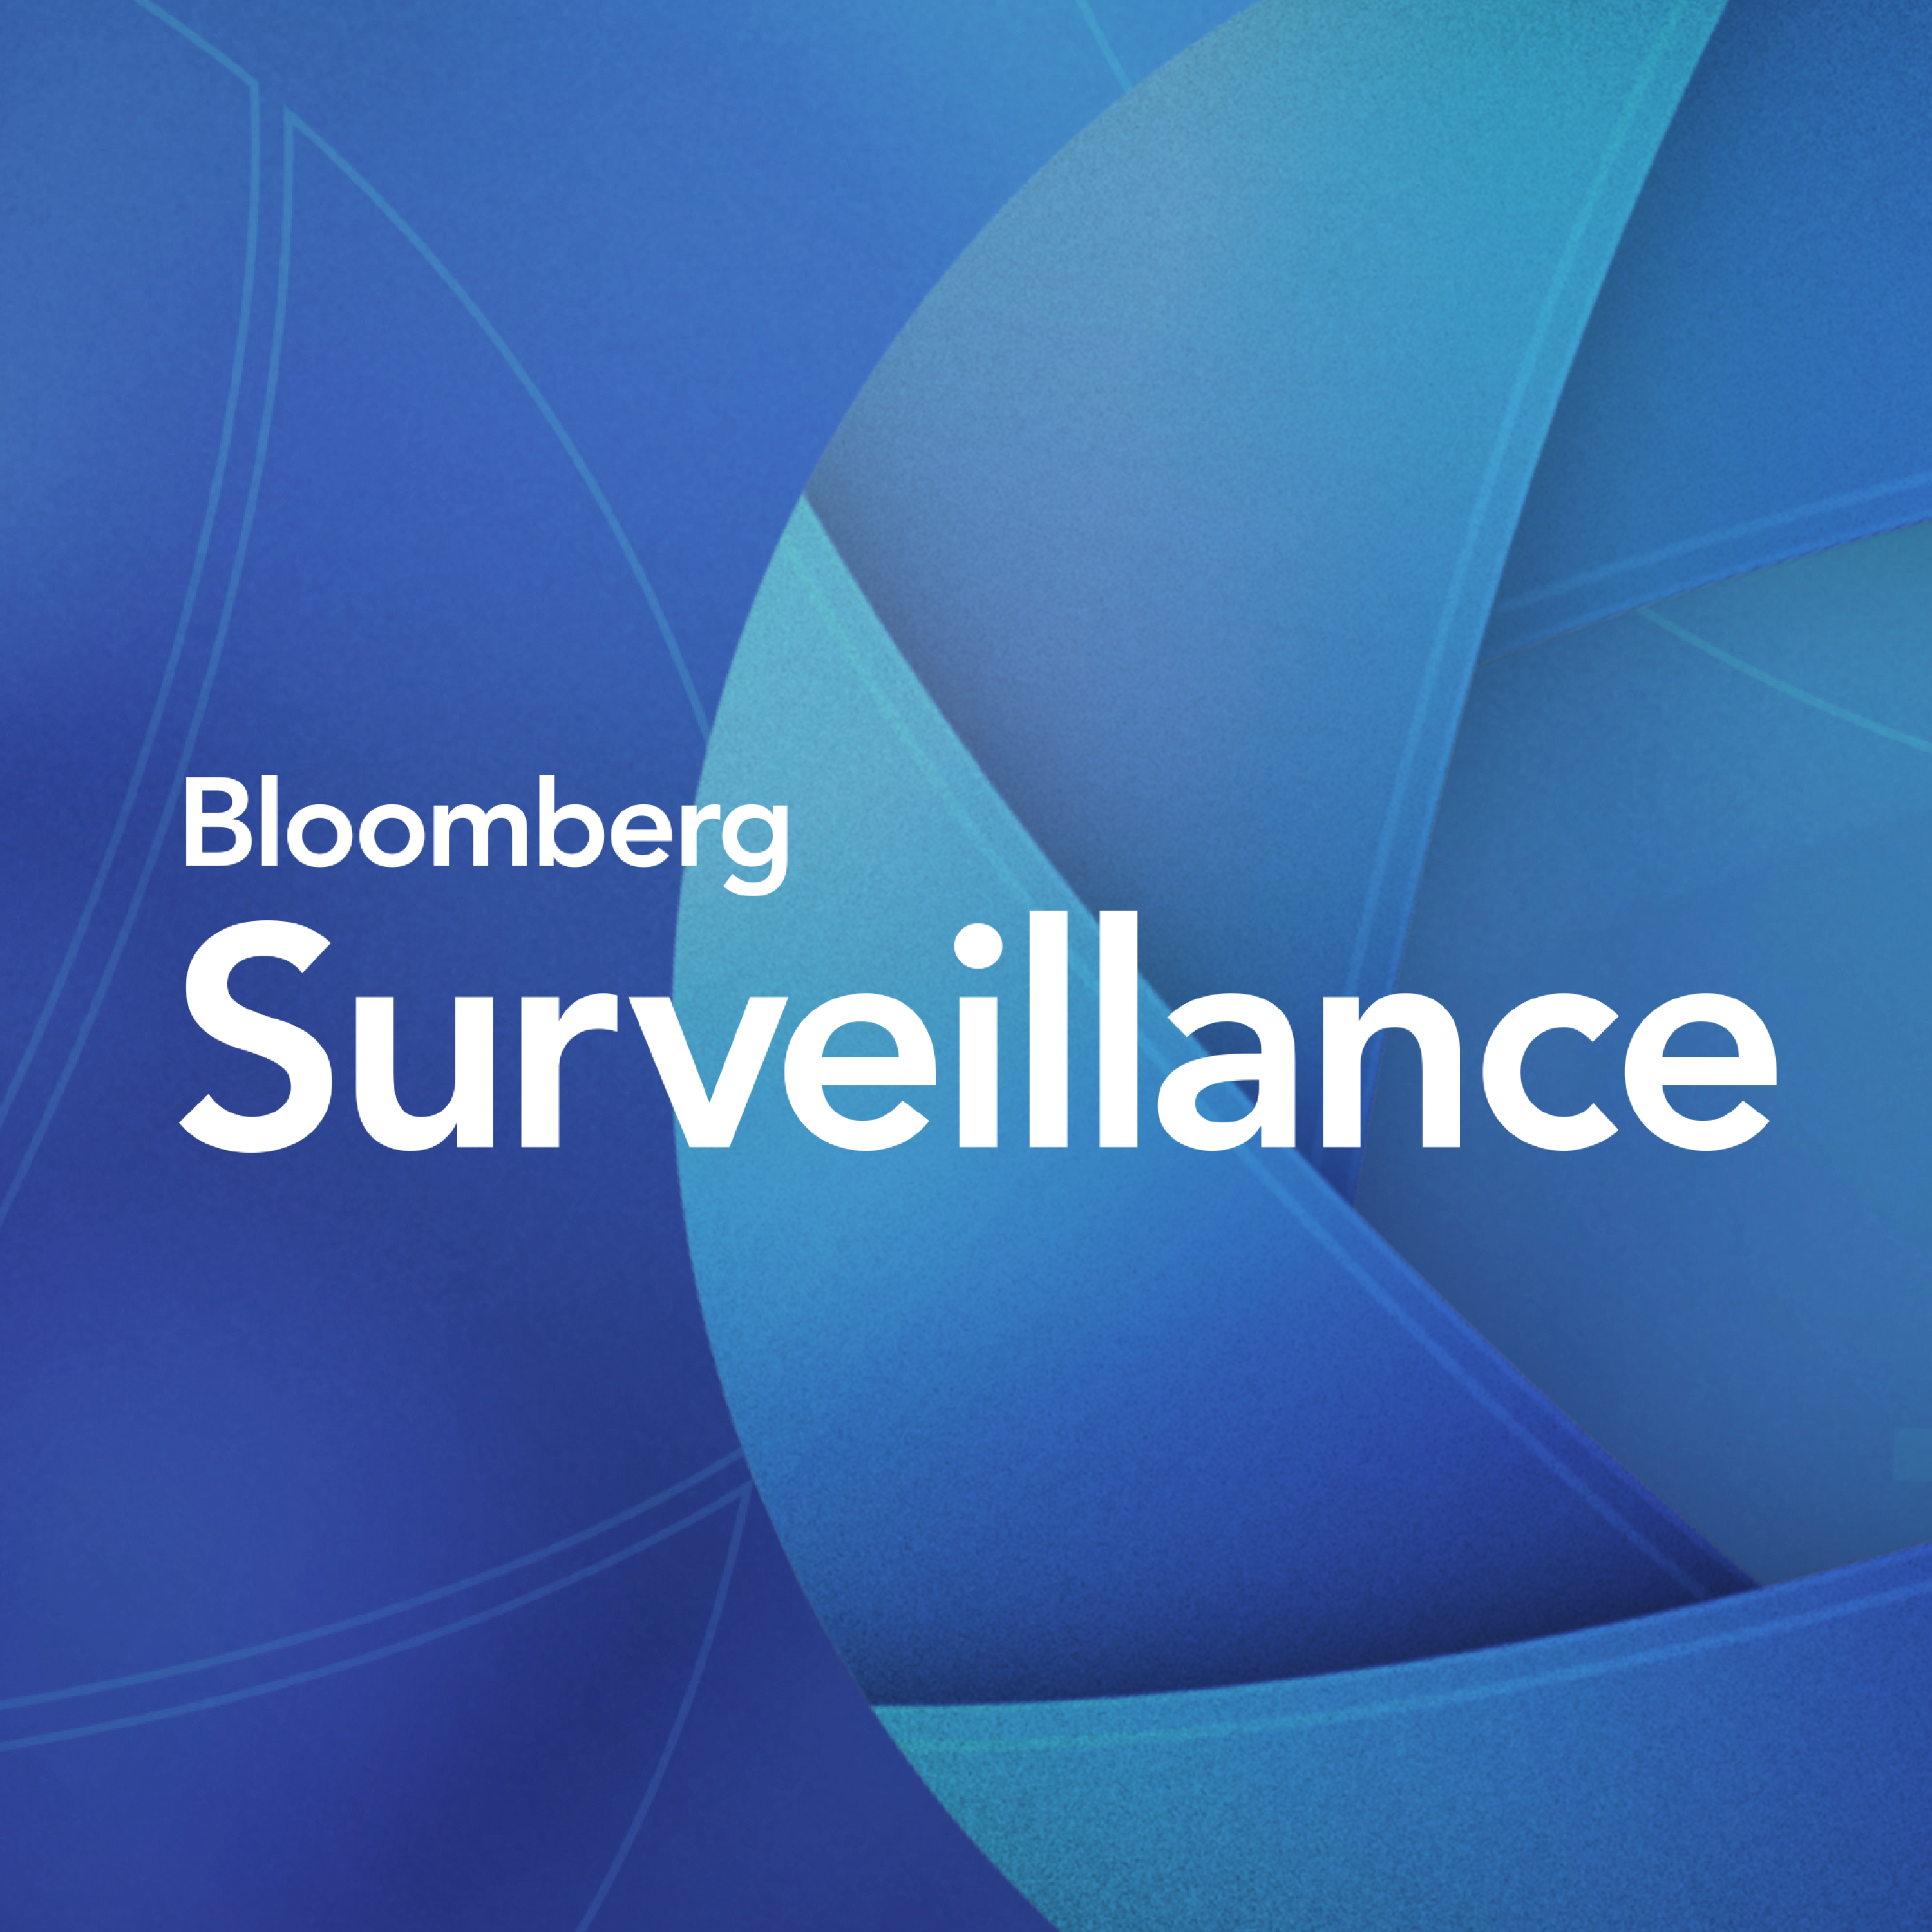 Surveillance: Weakening Growth With LaVorgna